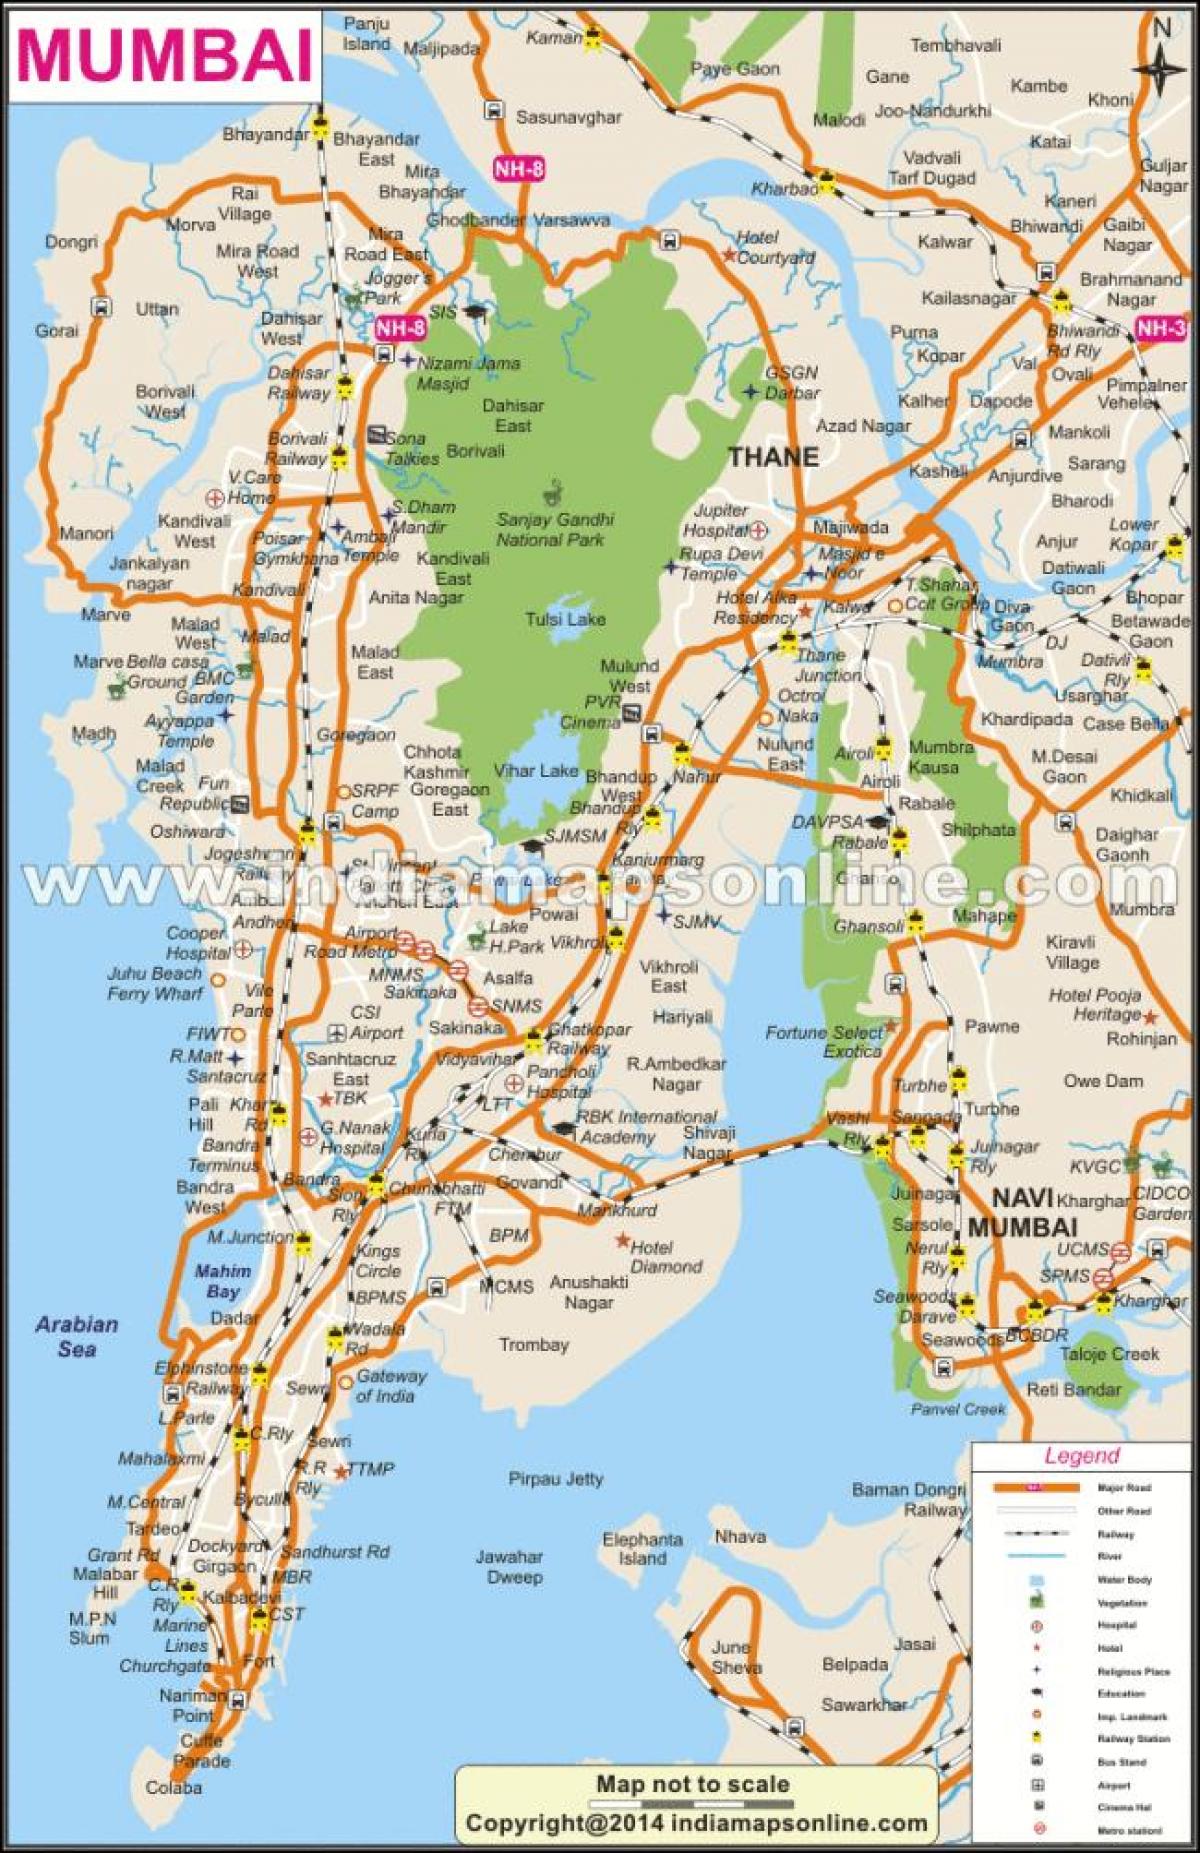 kompletní mapa Mumbai